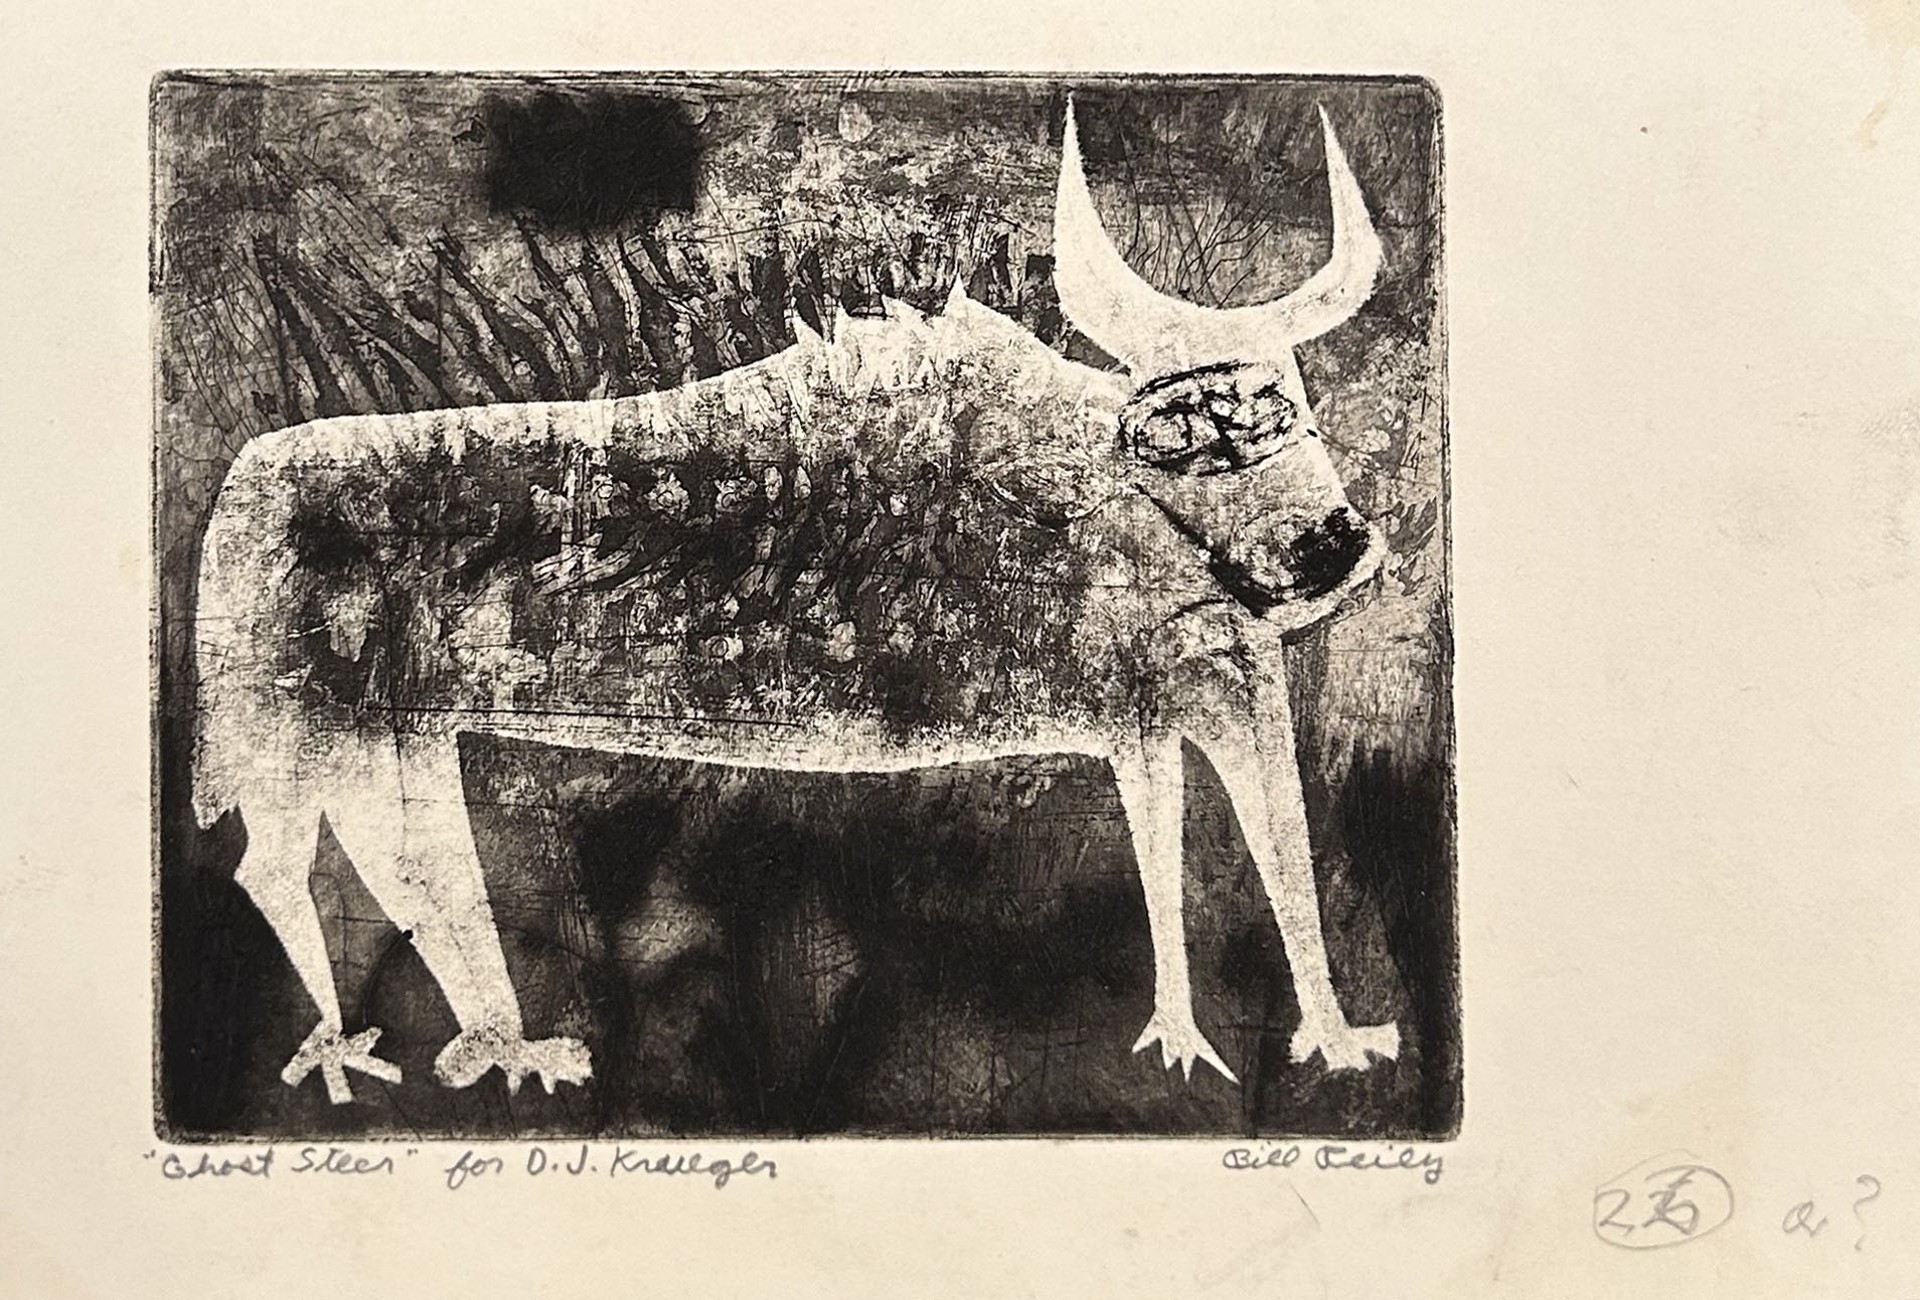 26a(2). Ghost Steer (for D.J. Krueger) by Bill Reily - Prints